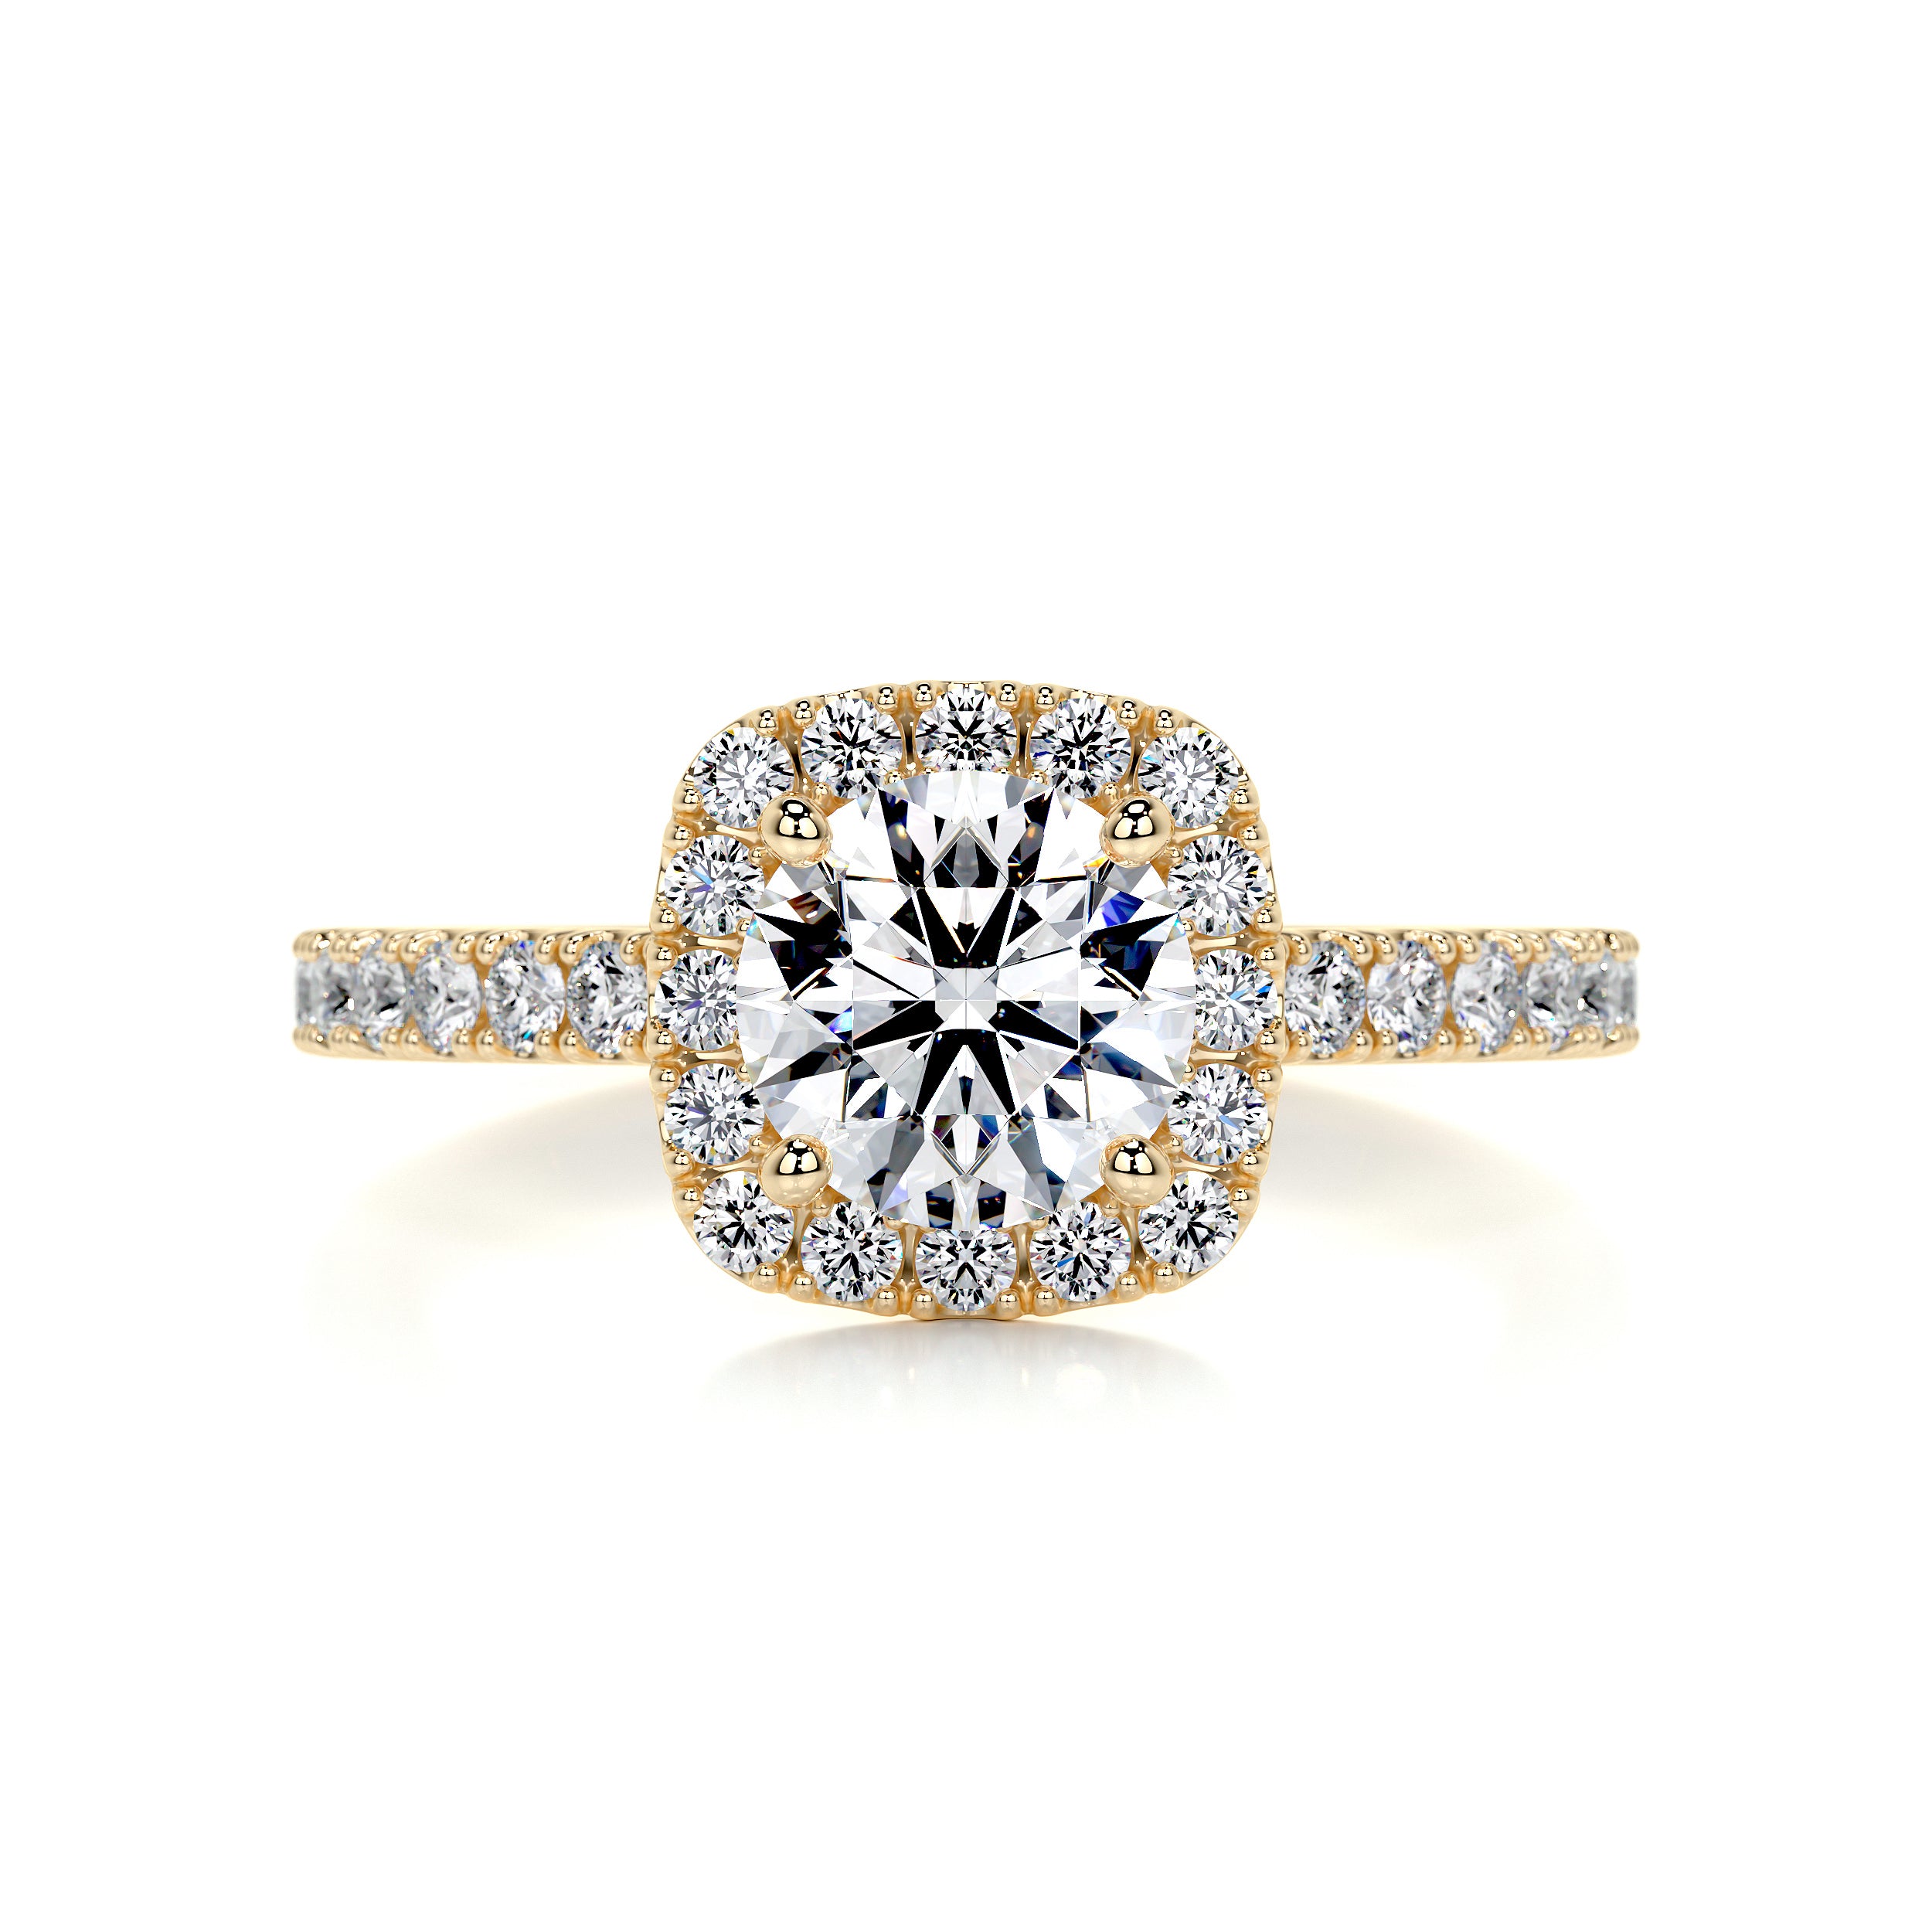 Claudia Diamond Engagement Ring   (1.4 Carat) -18K Yellow Gold